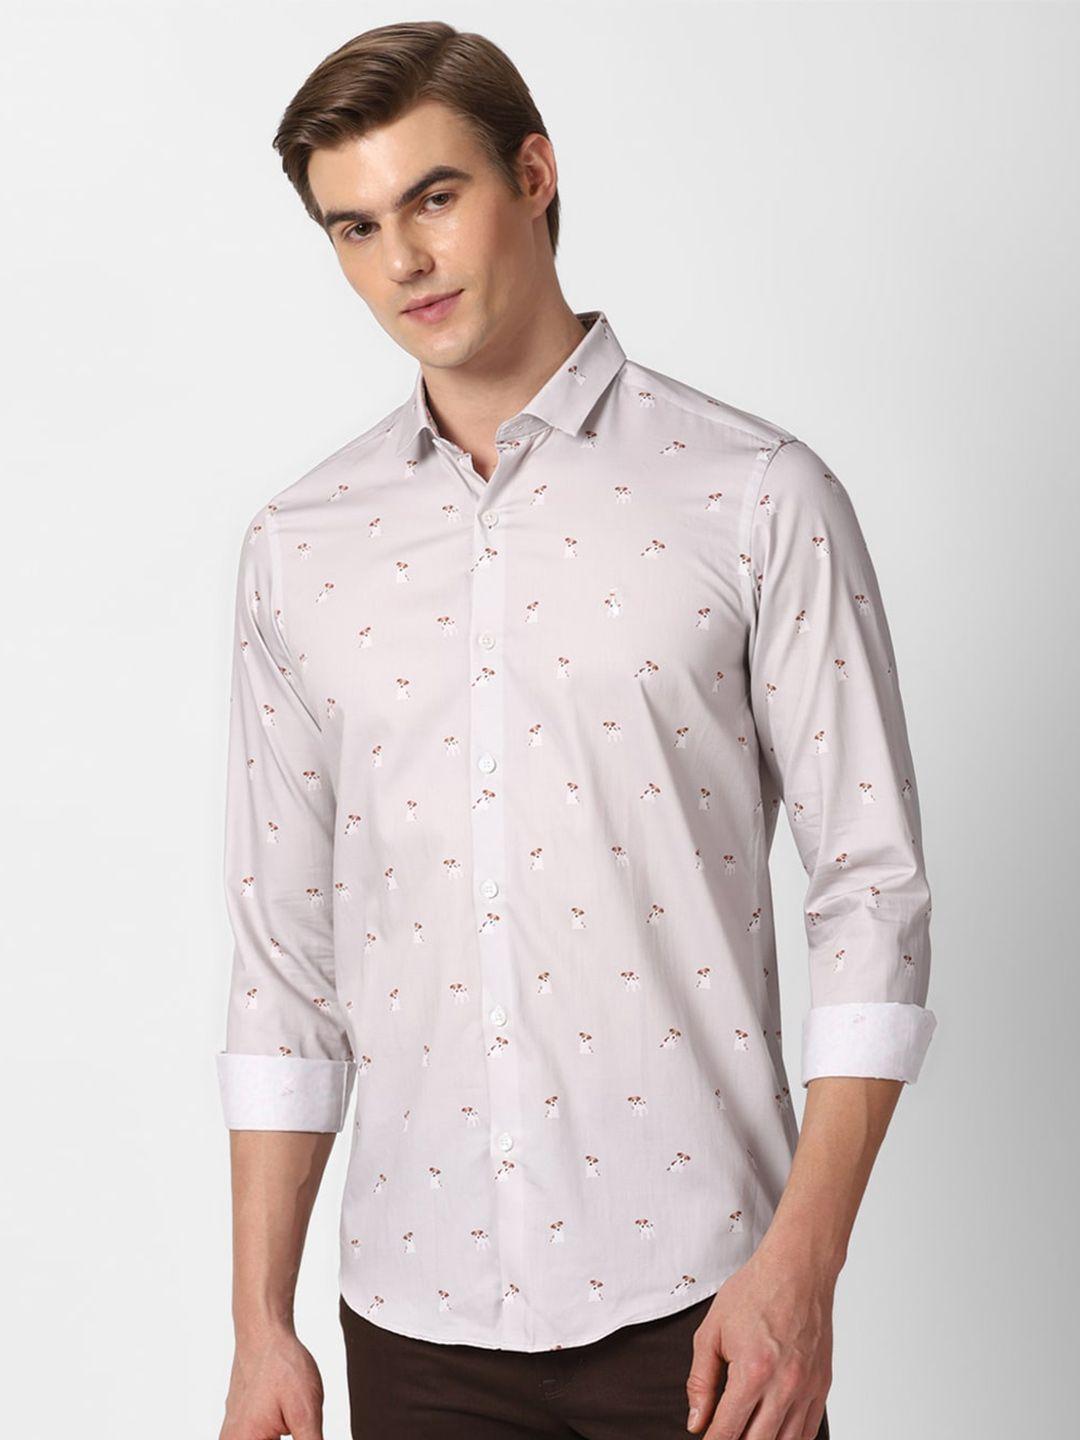 simon carter london conversational printed spread collar pure cotton casual shirt